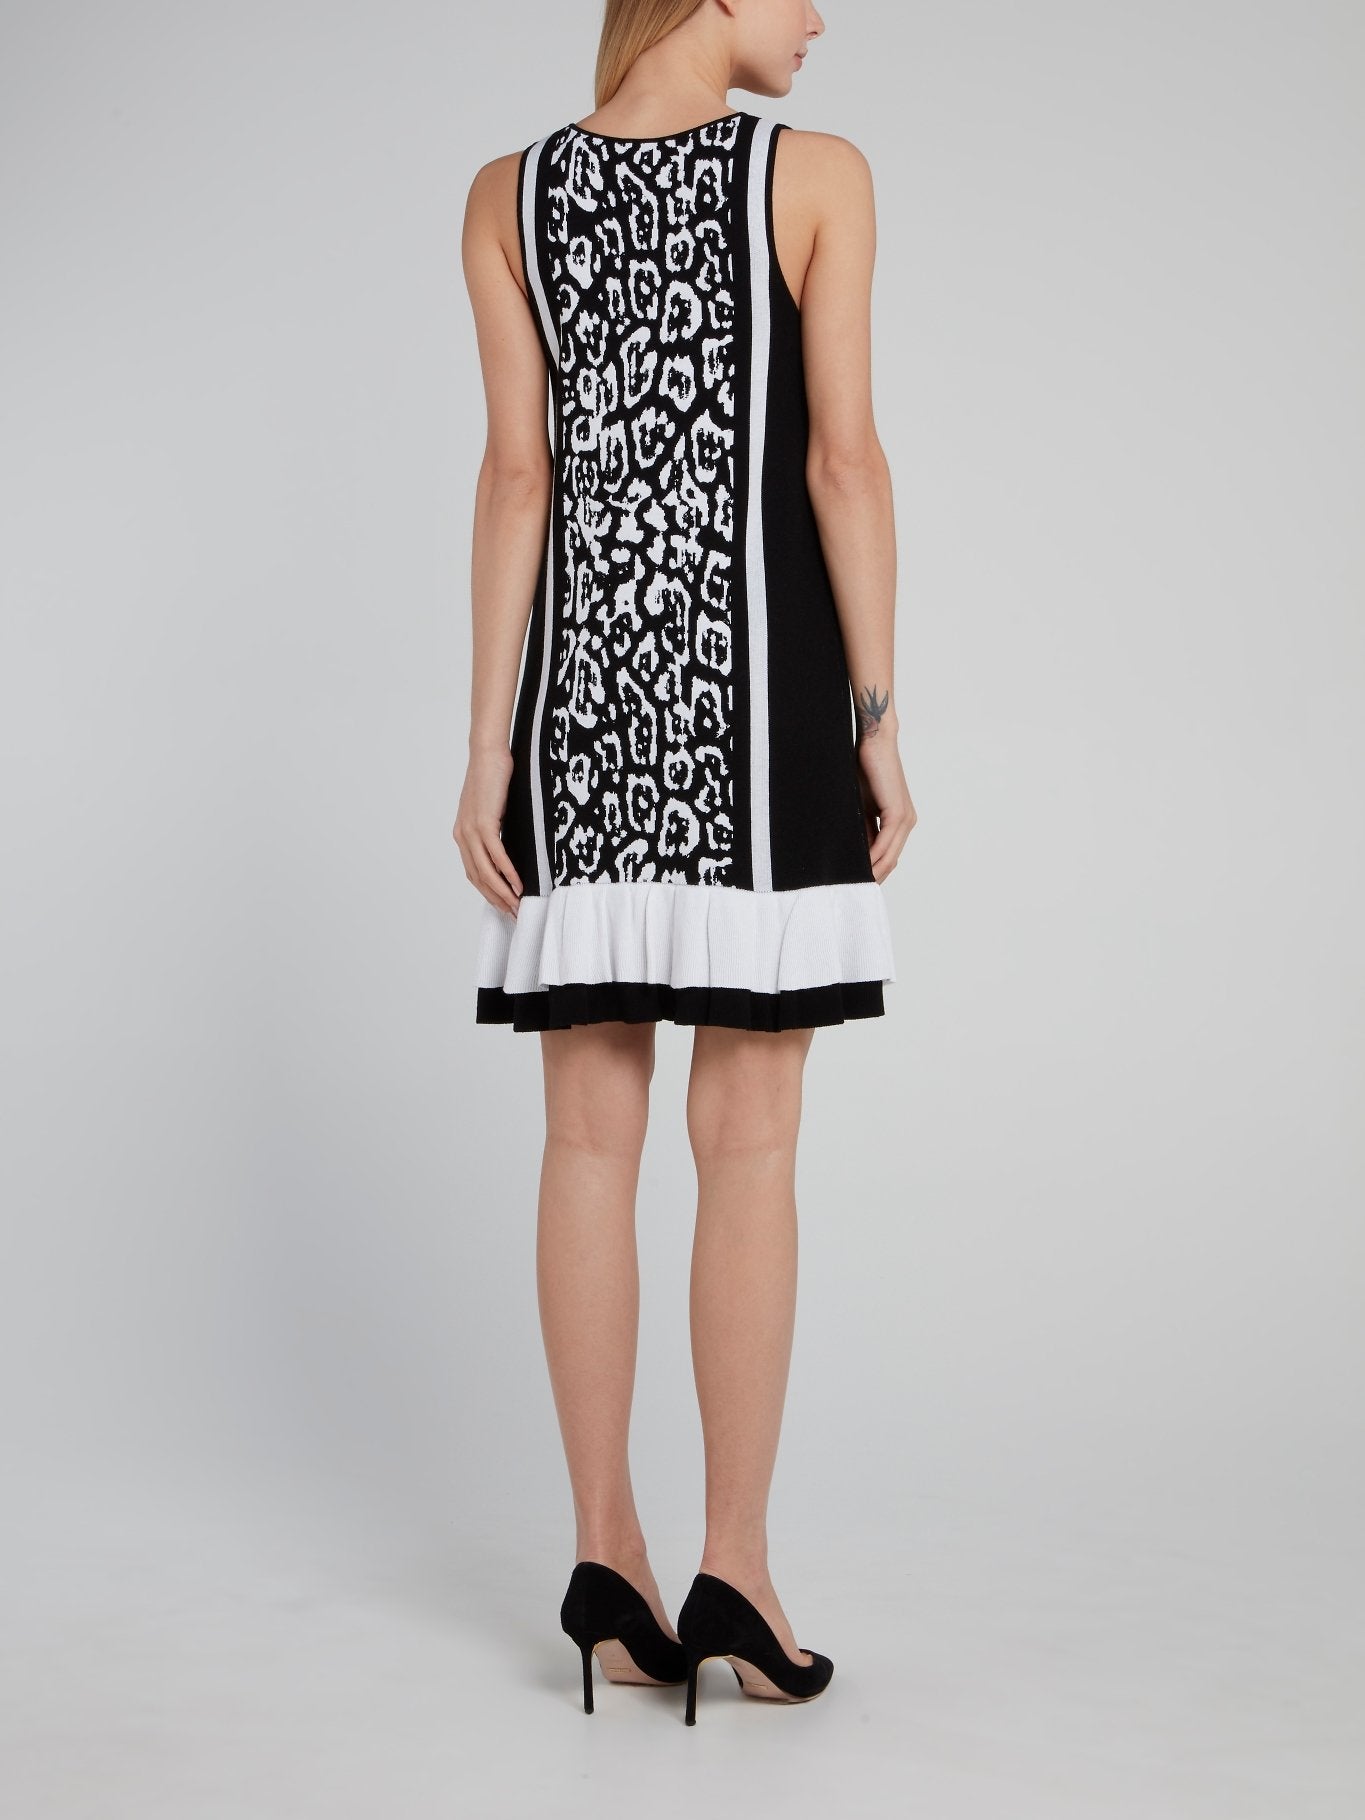 Black and White Leopard Print Mini Dress